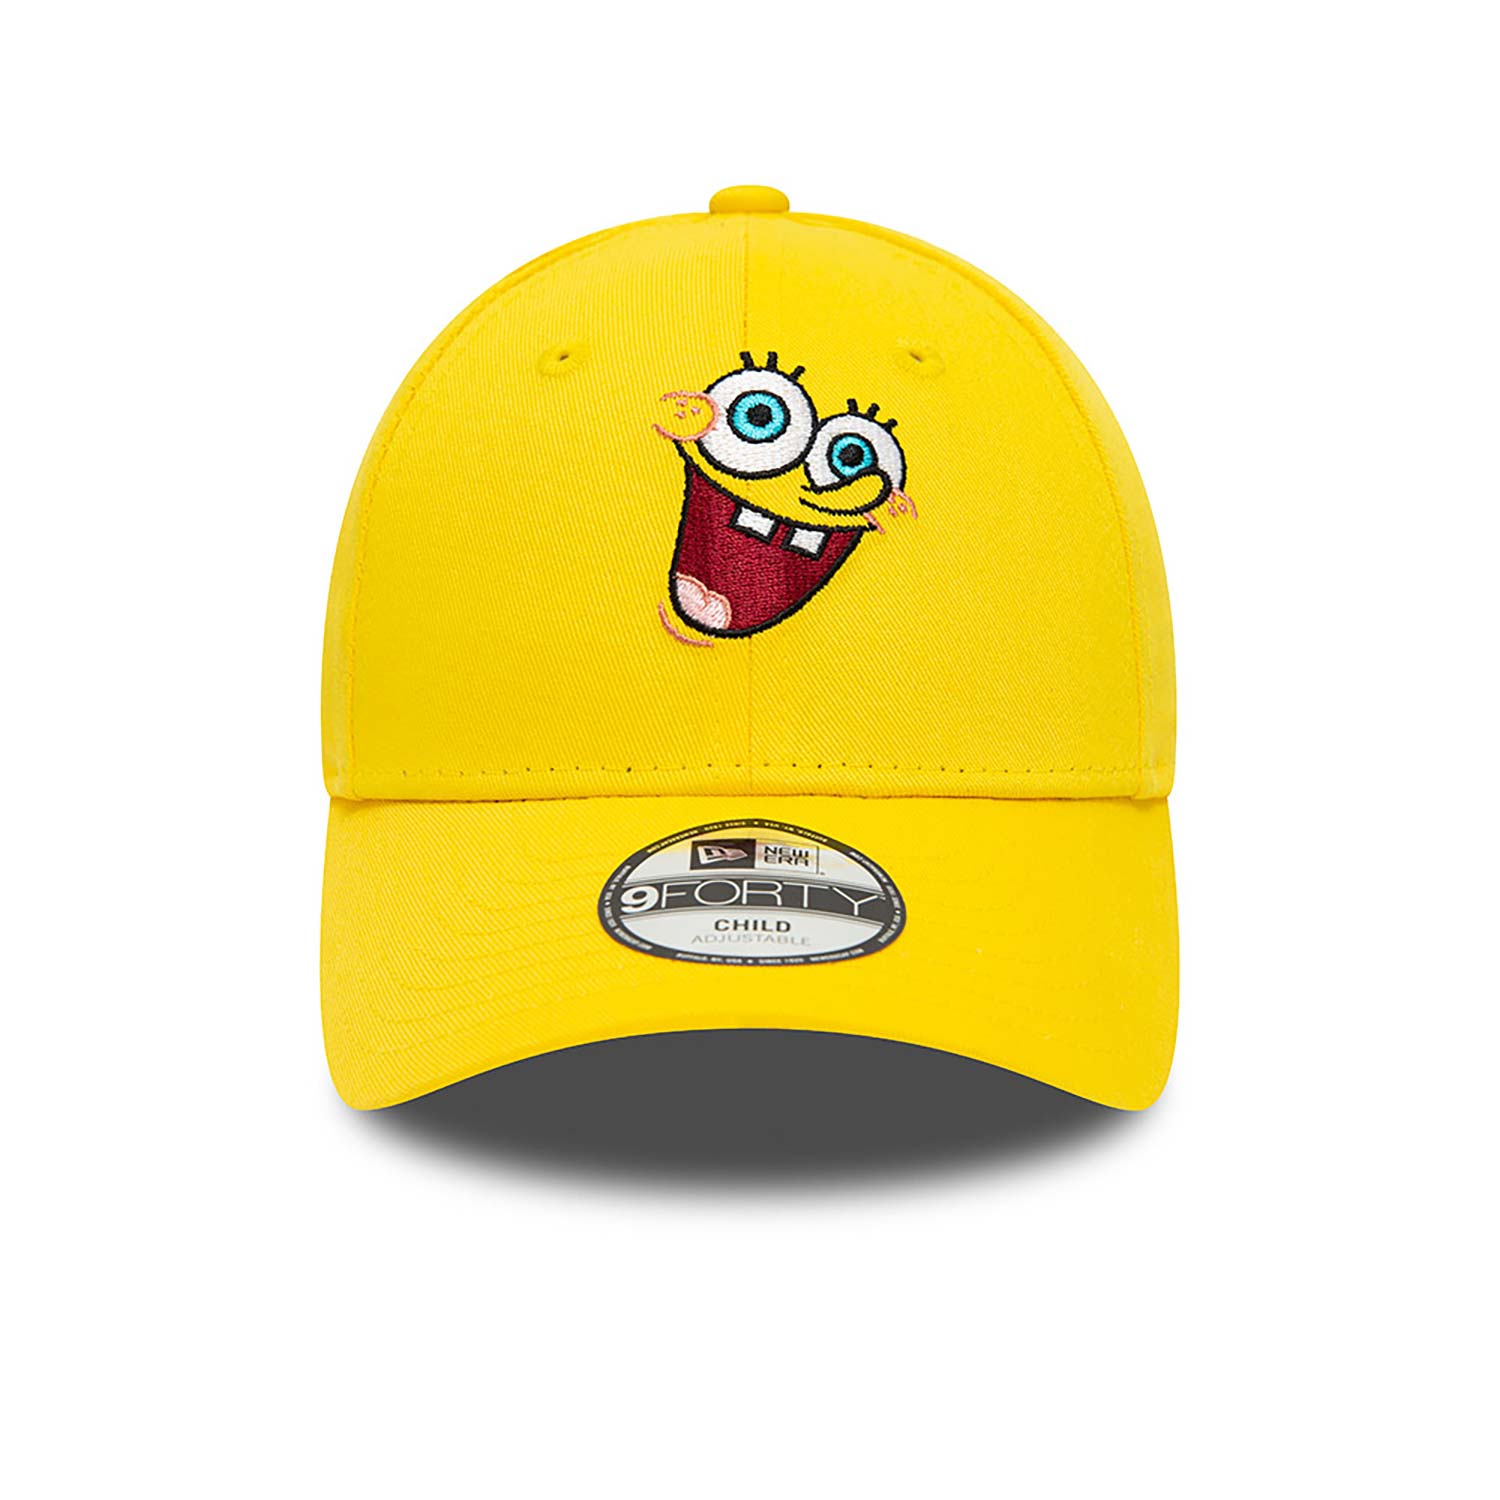 Spongebob Squarepants Youth Nickelodeon Yellow 9FORTY Adjustable Cap